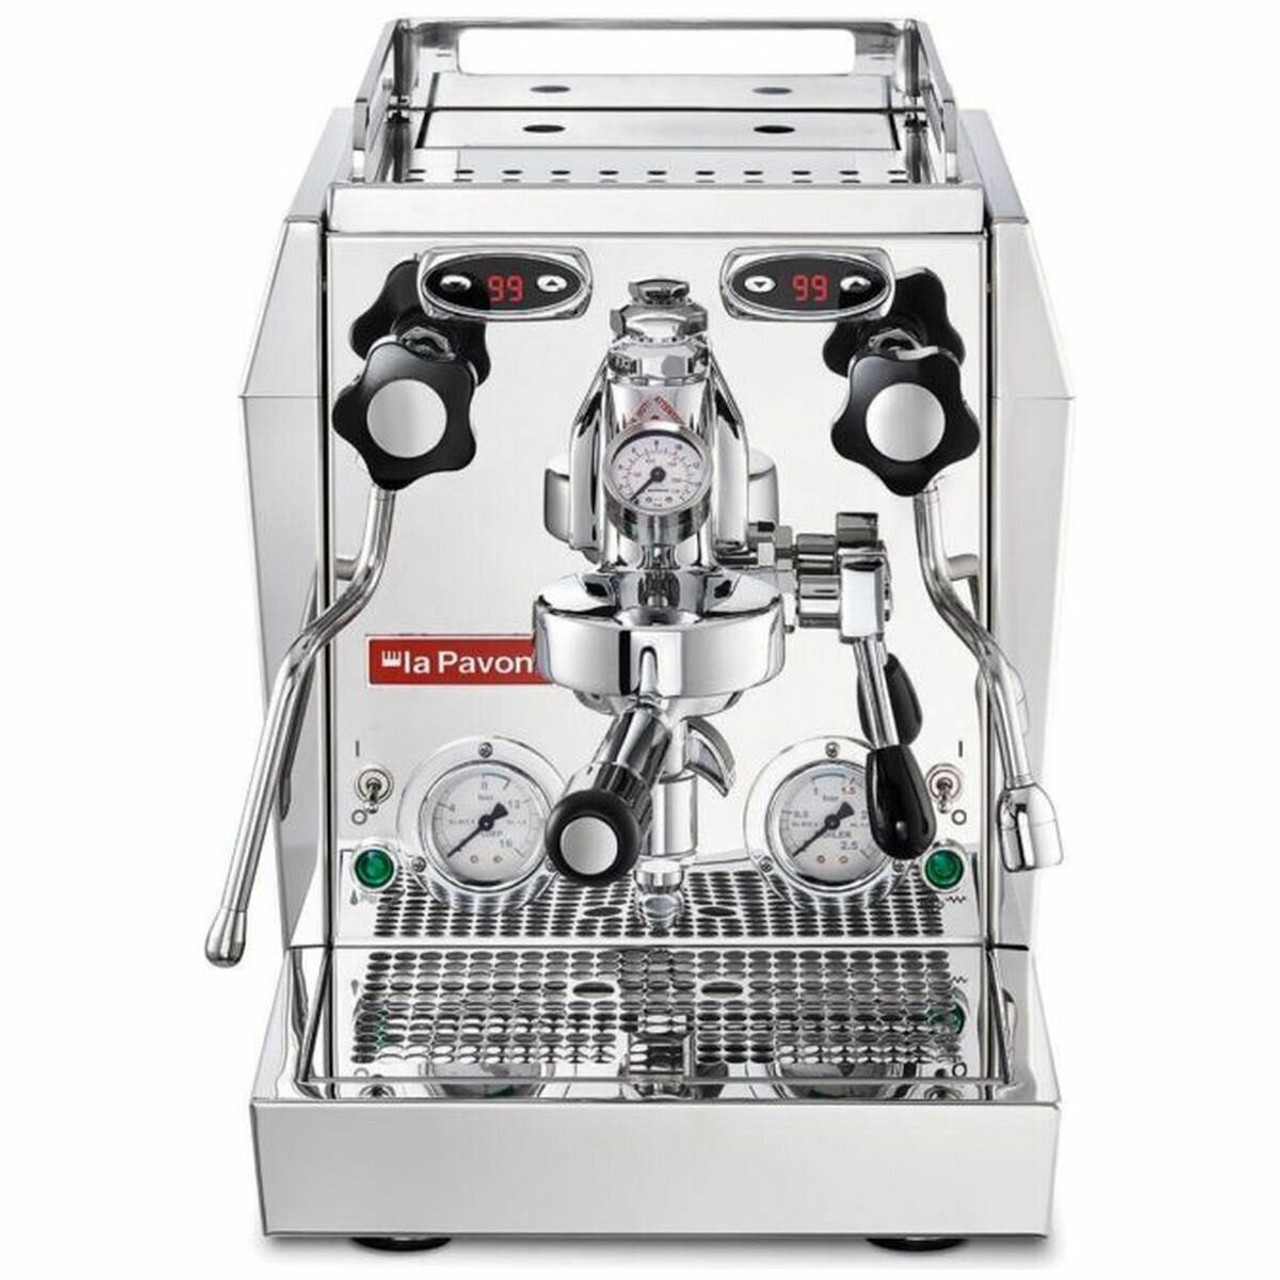 LPSGEV03AU - Smeg La Pavoni Botticelli Semi-Professional Coffee Machine - Stainless Steel